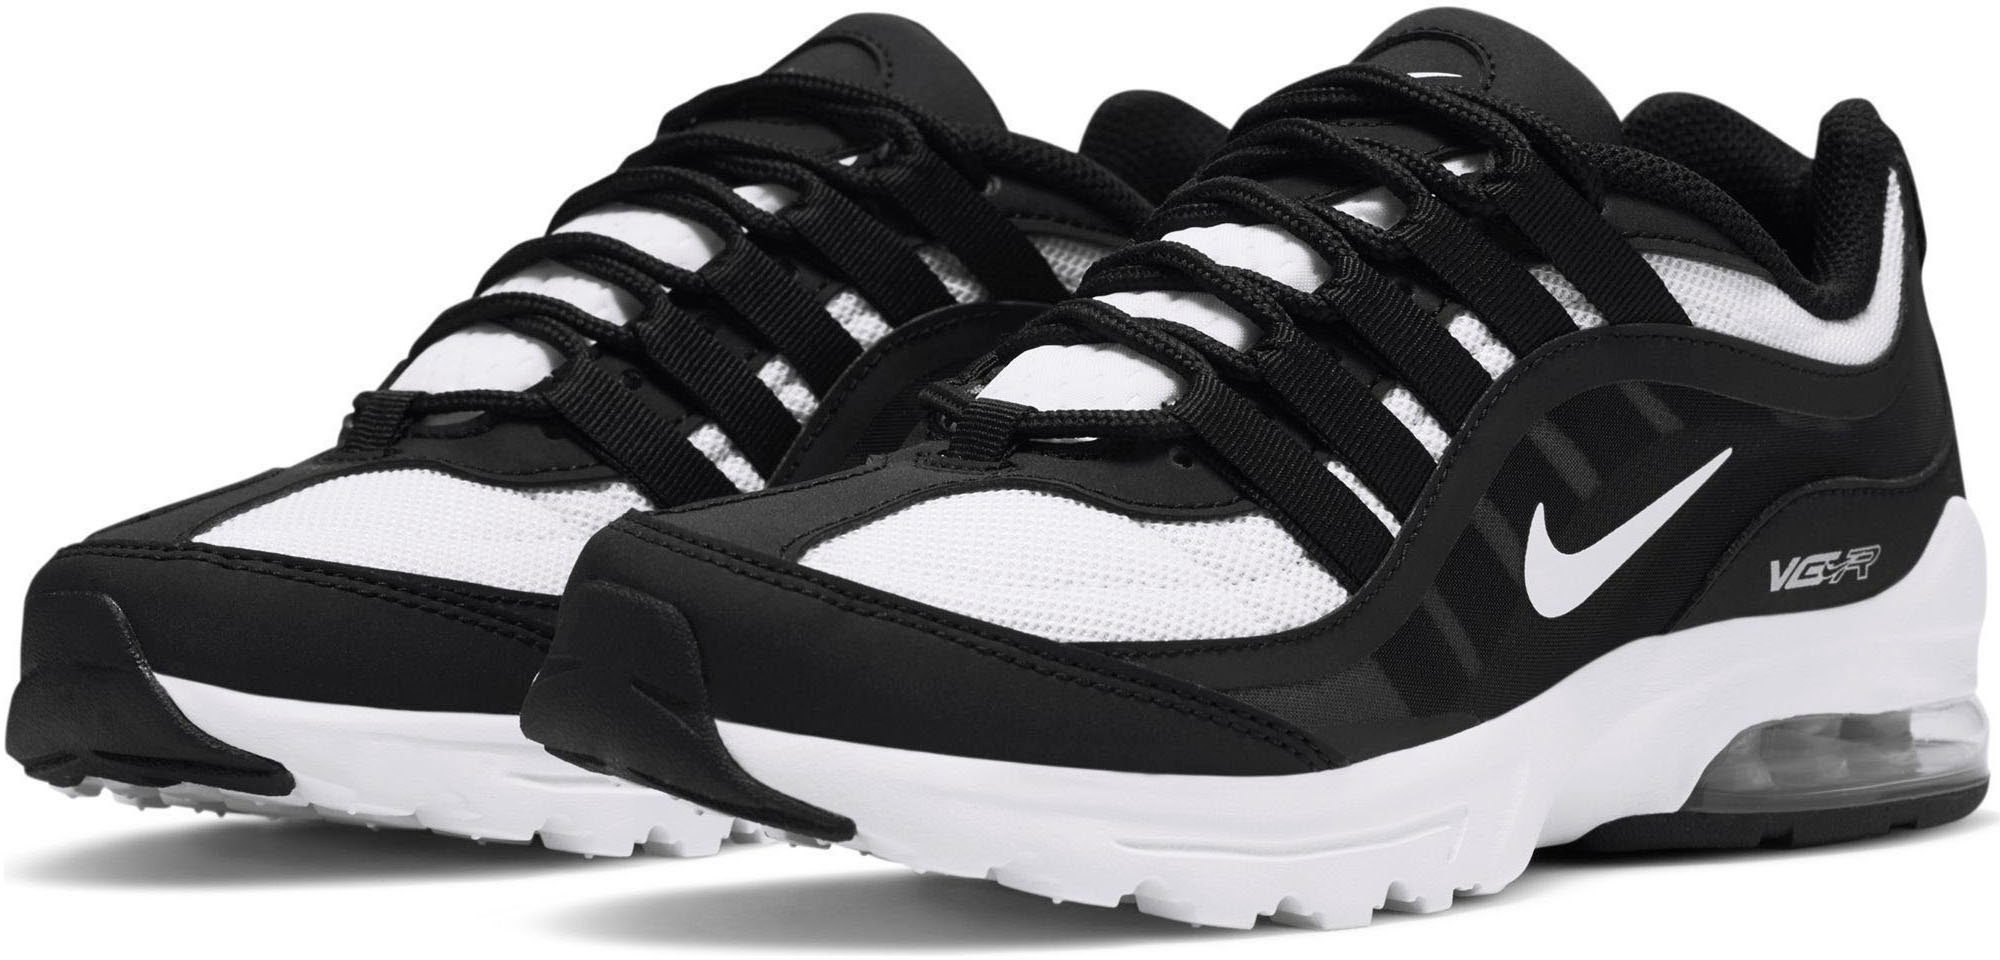 Nike Sportswear »Wmns Air Max VG-R« Sneaker kaufen | OTTO